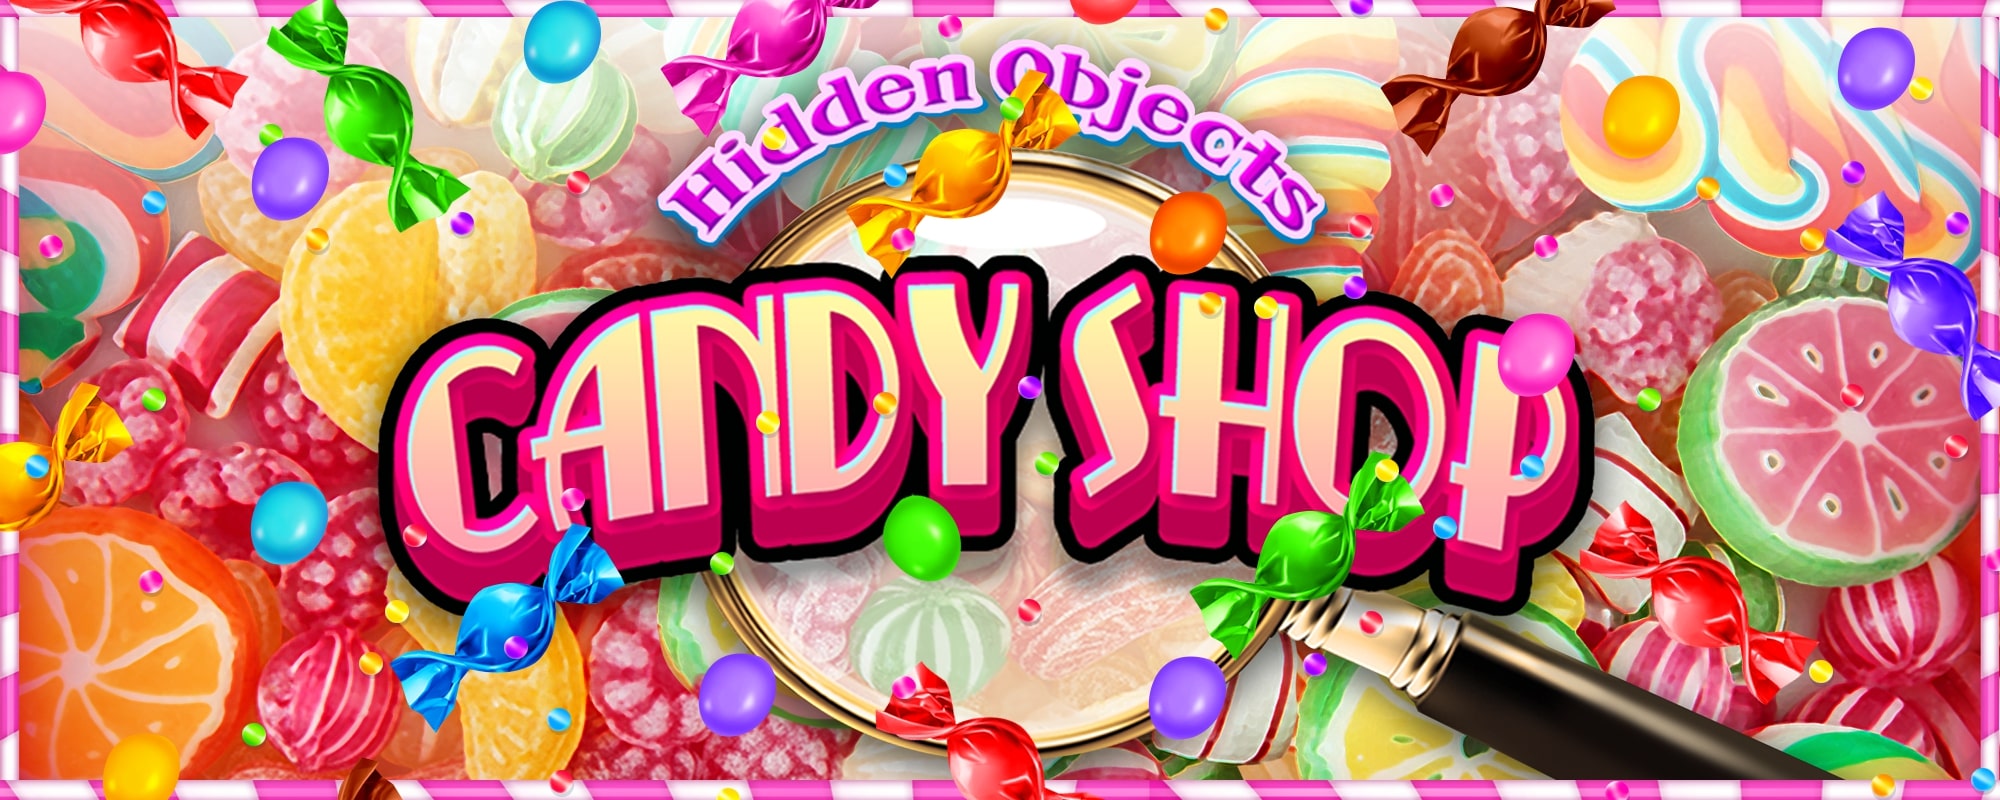 Hidden Objects Candy Shop